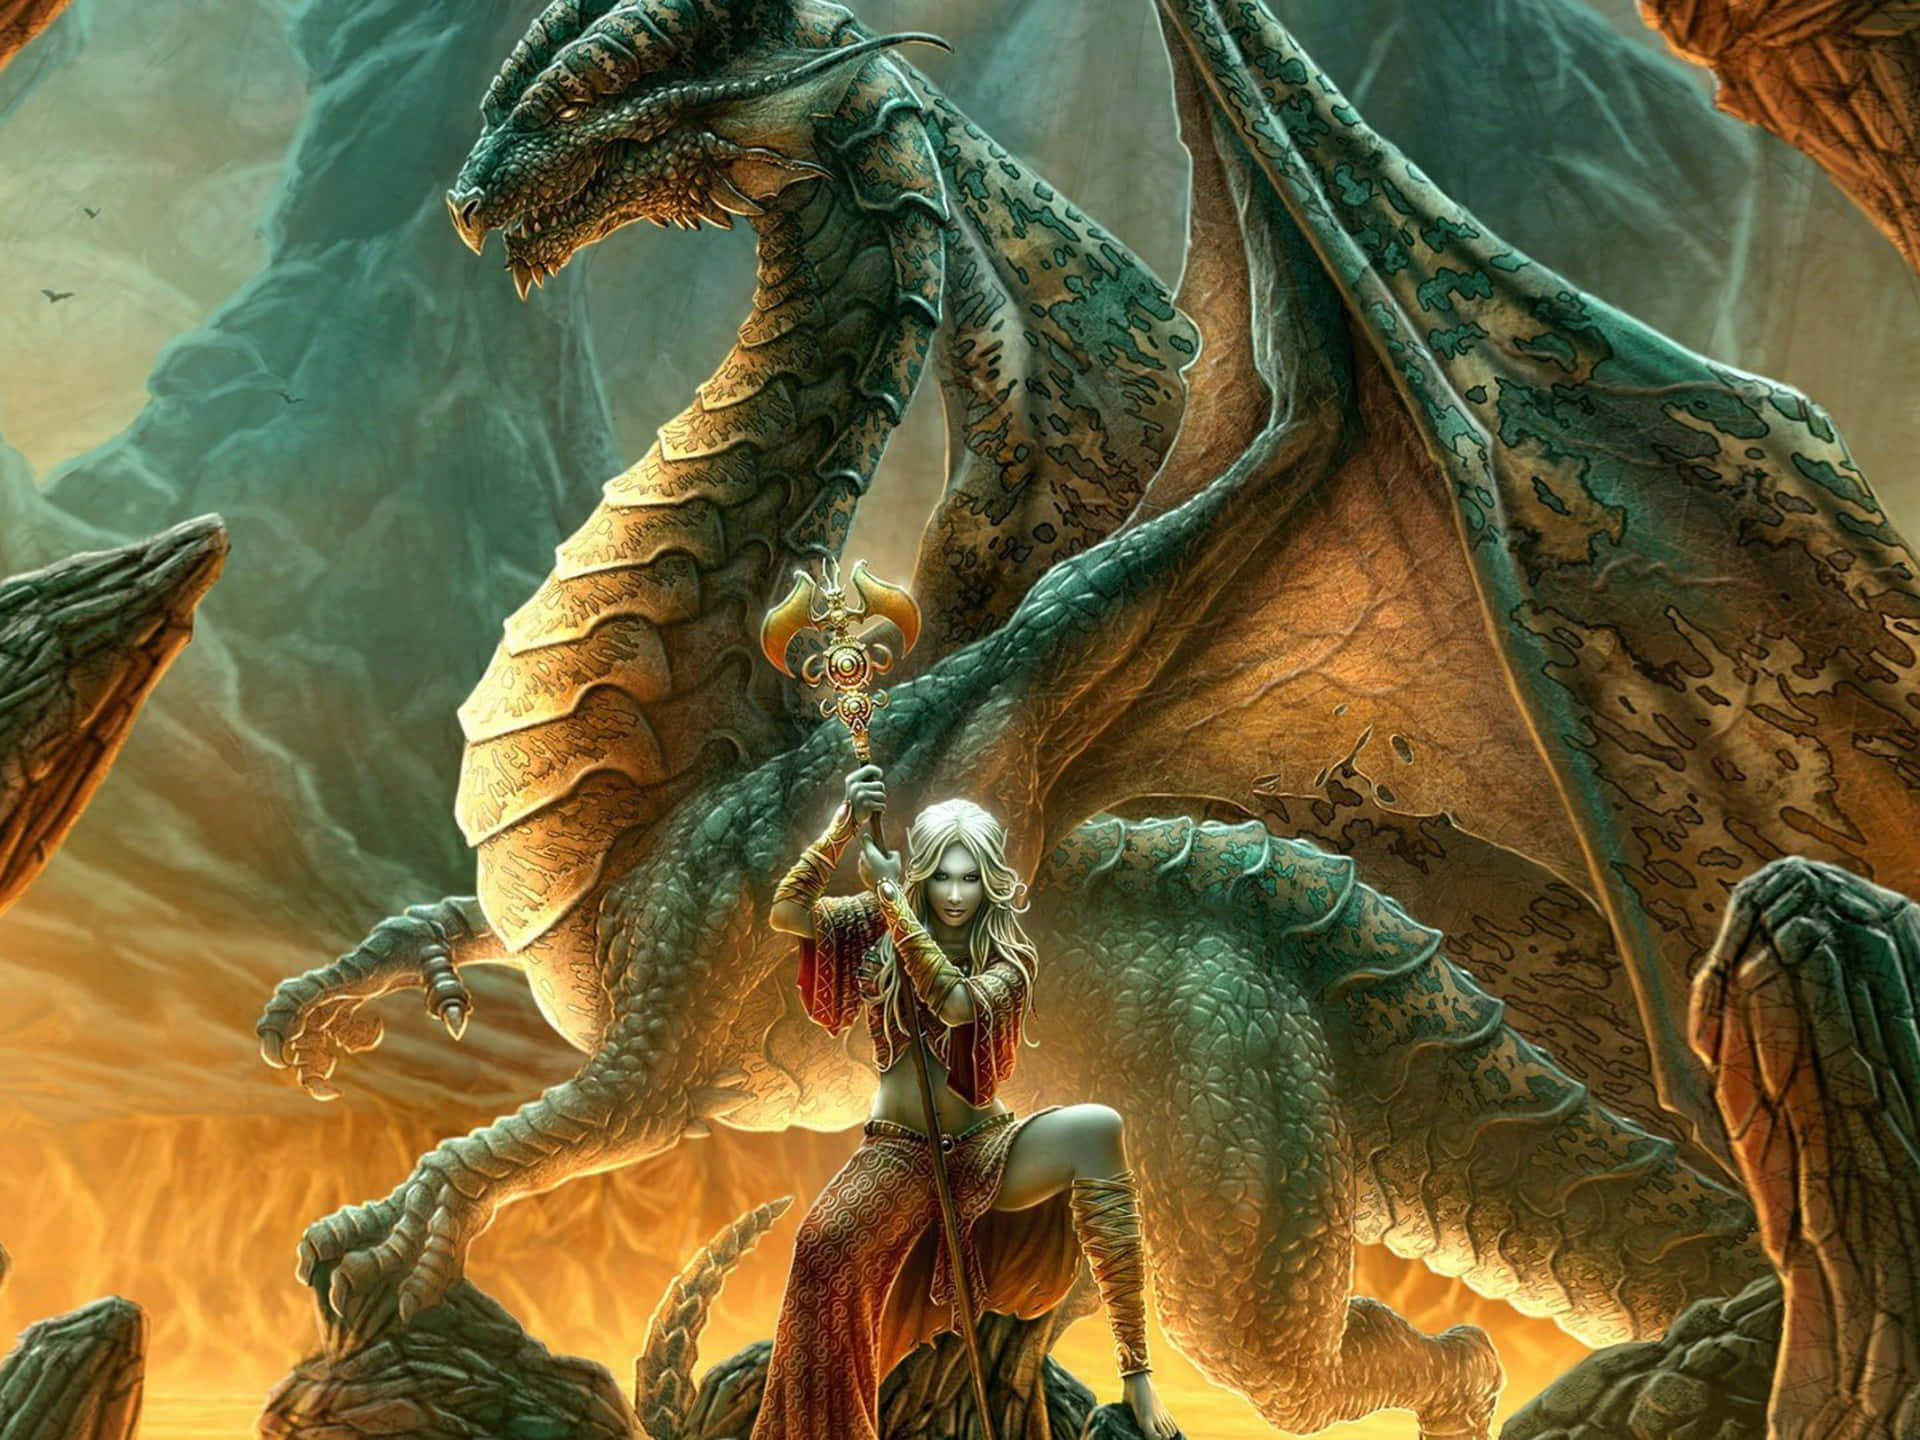 An epic, fiery dragon illustration. Wallpaper